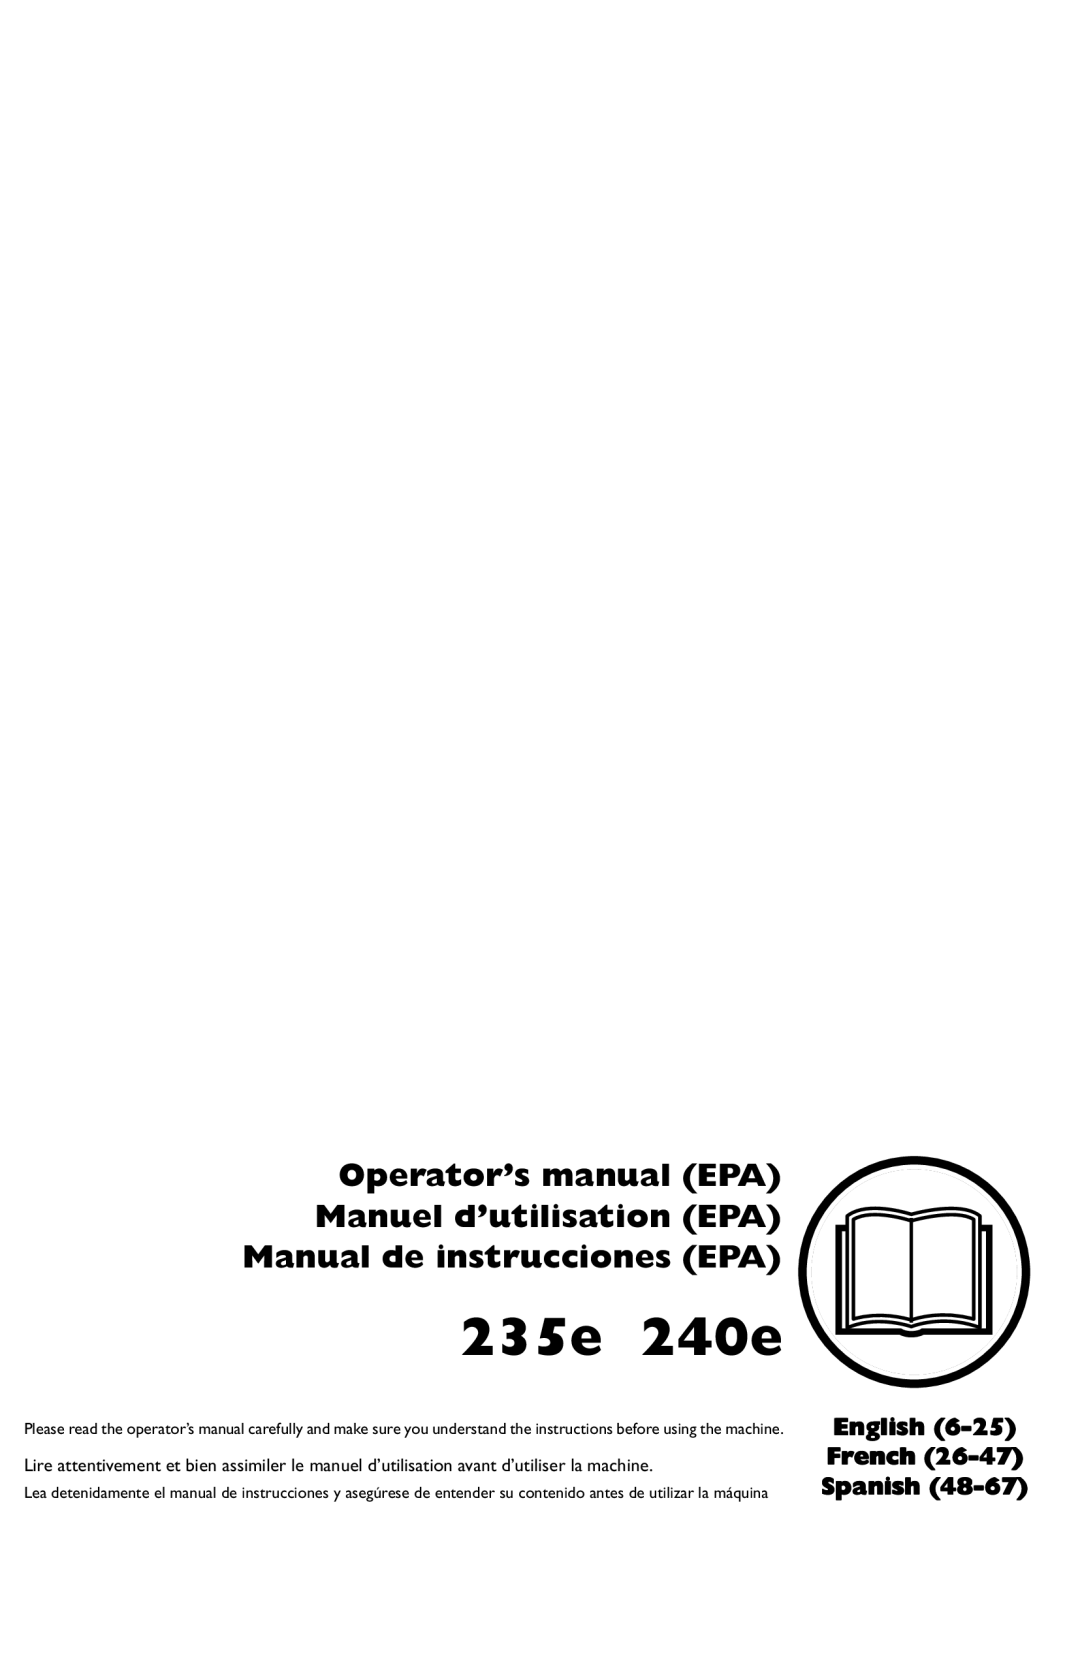 Husqvarna manuel dutilisation 235e 240e, Operator’s manual EPA Manuel d’utilisation EPA, Manual de instrucciones EPA 